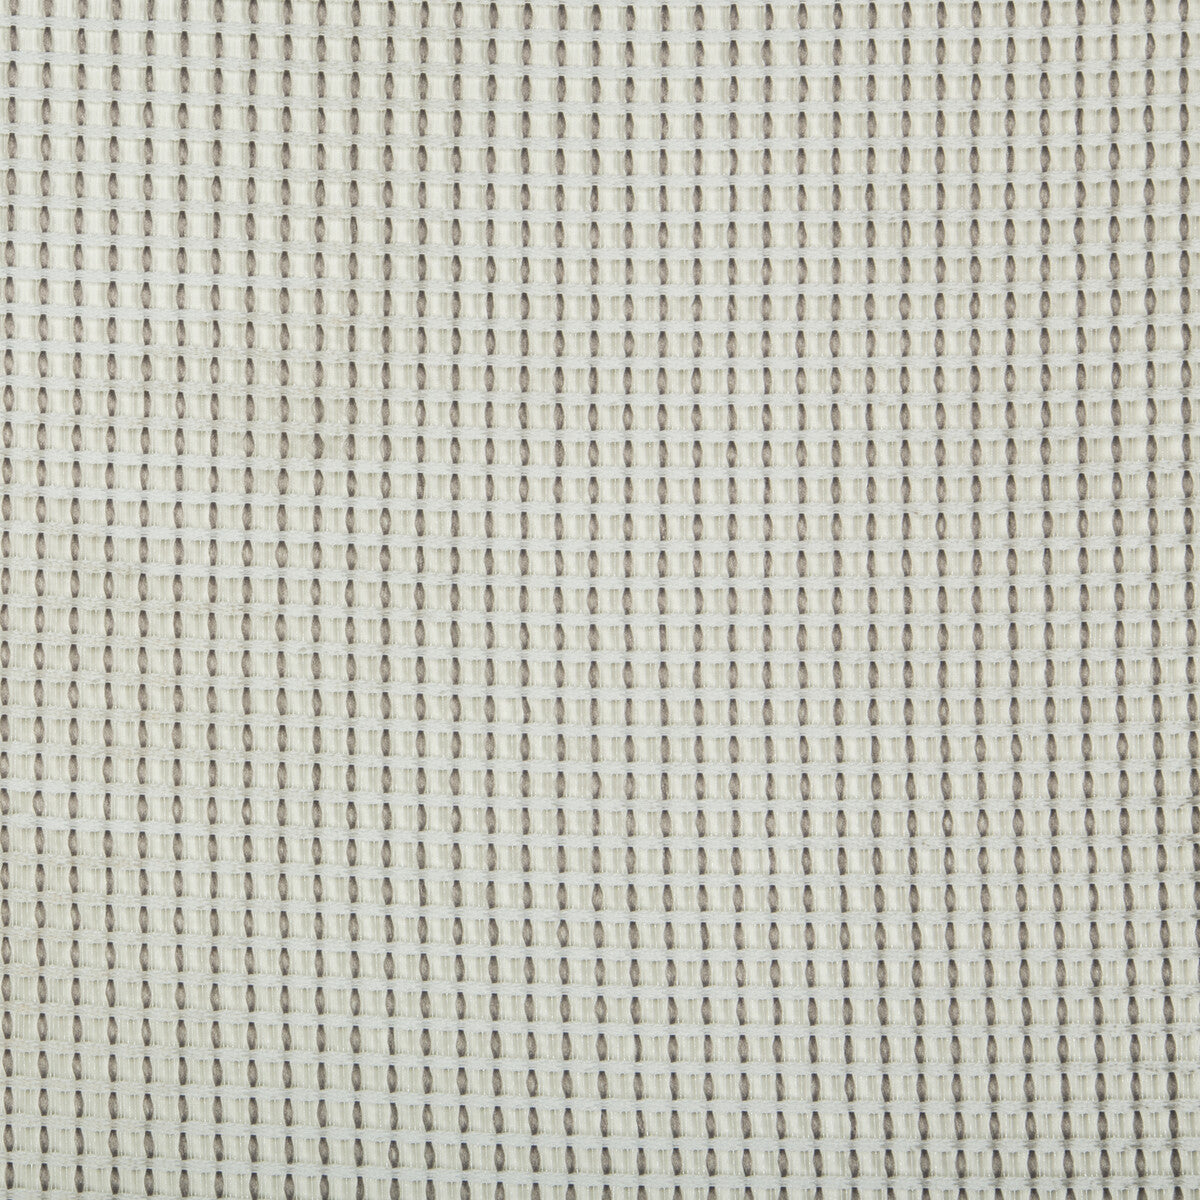 Kravet Basics fabric in 4271-11 color - pattern 4271.11.0 - by Kravet Basics in the Gis collection